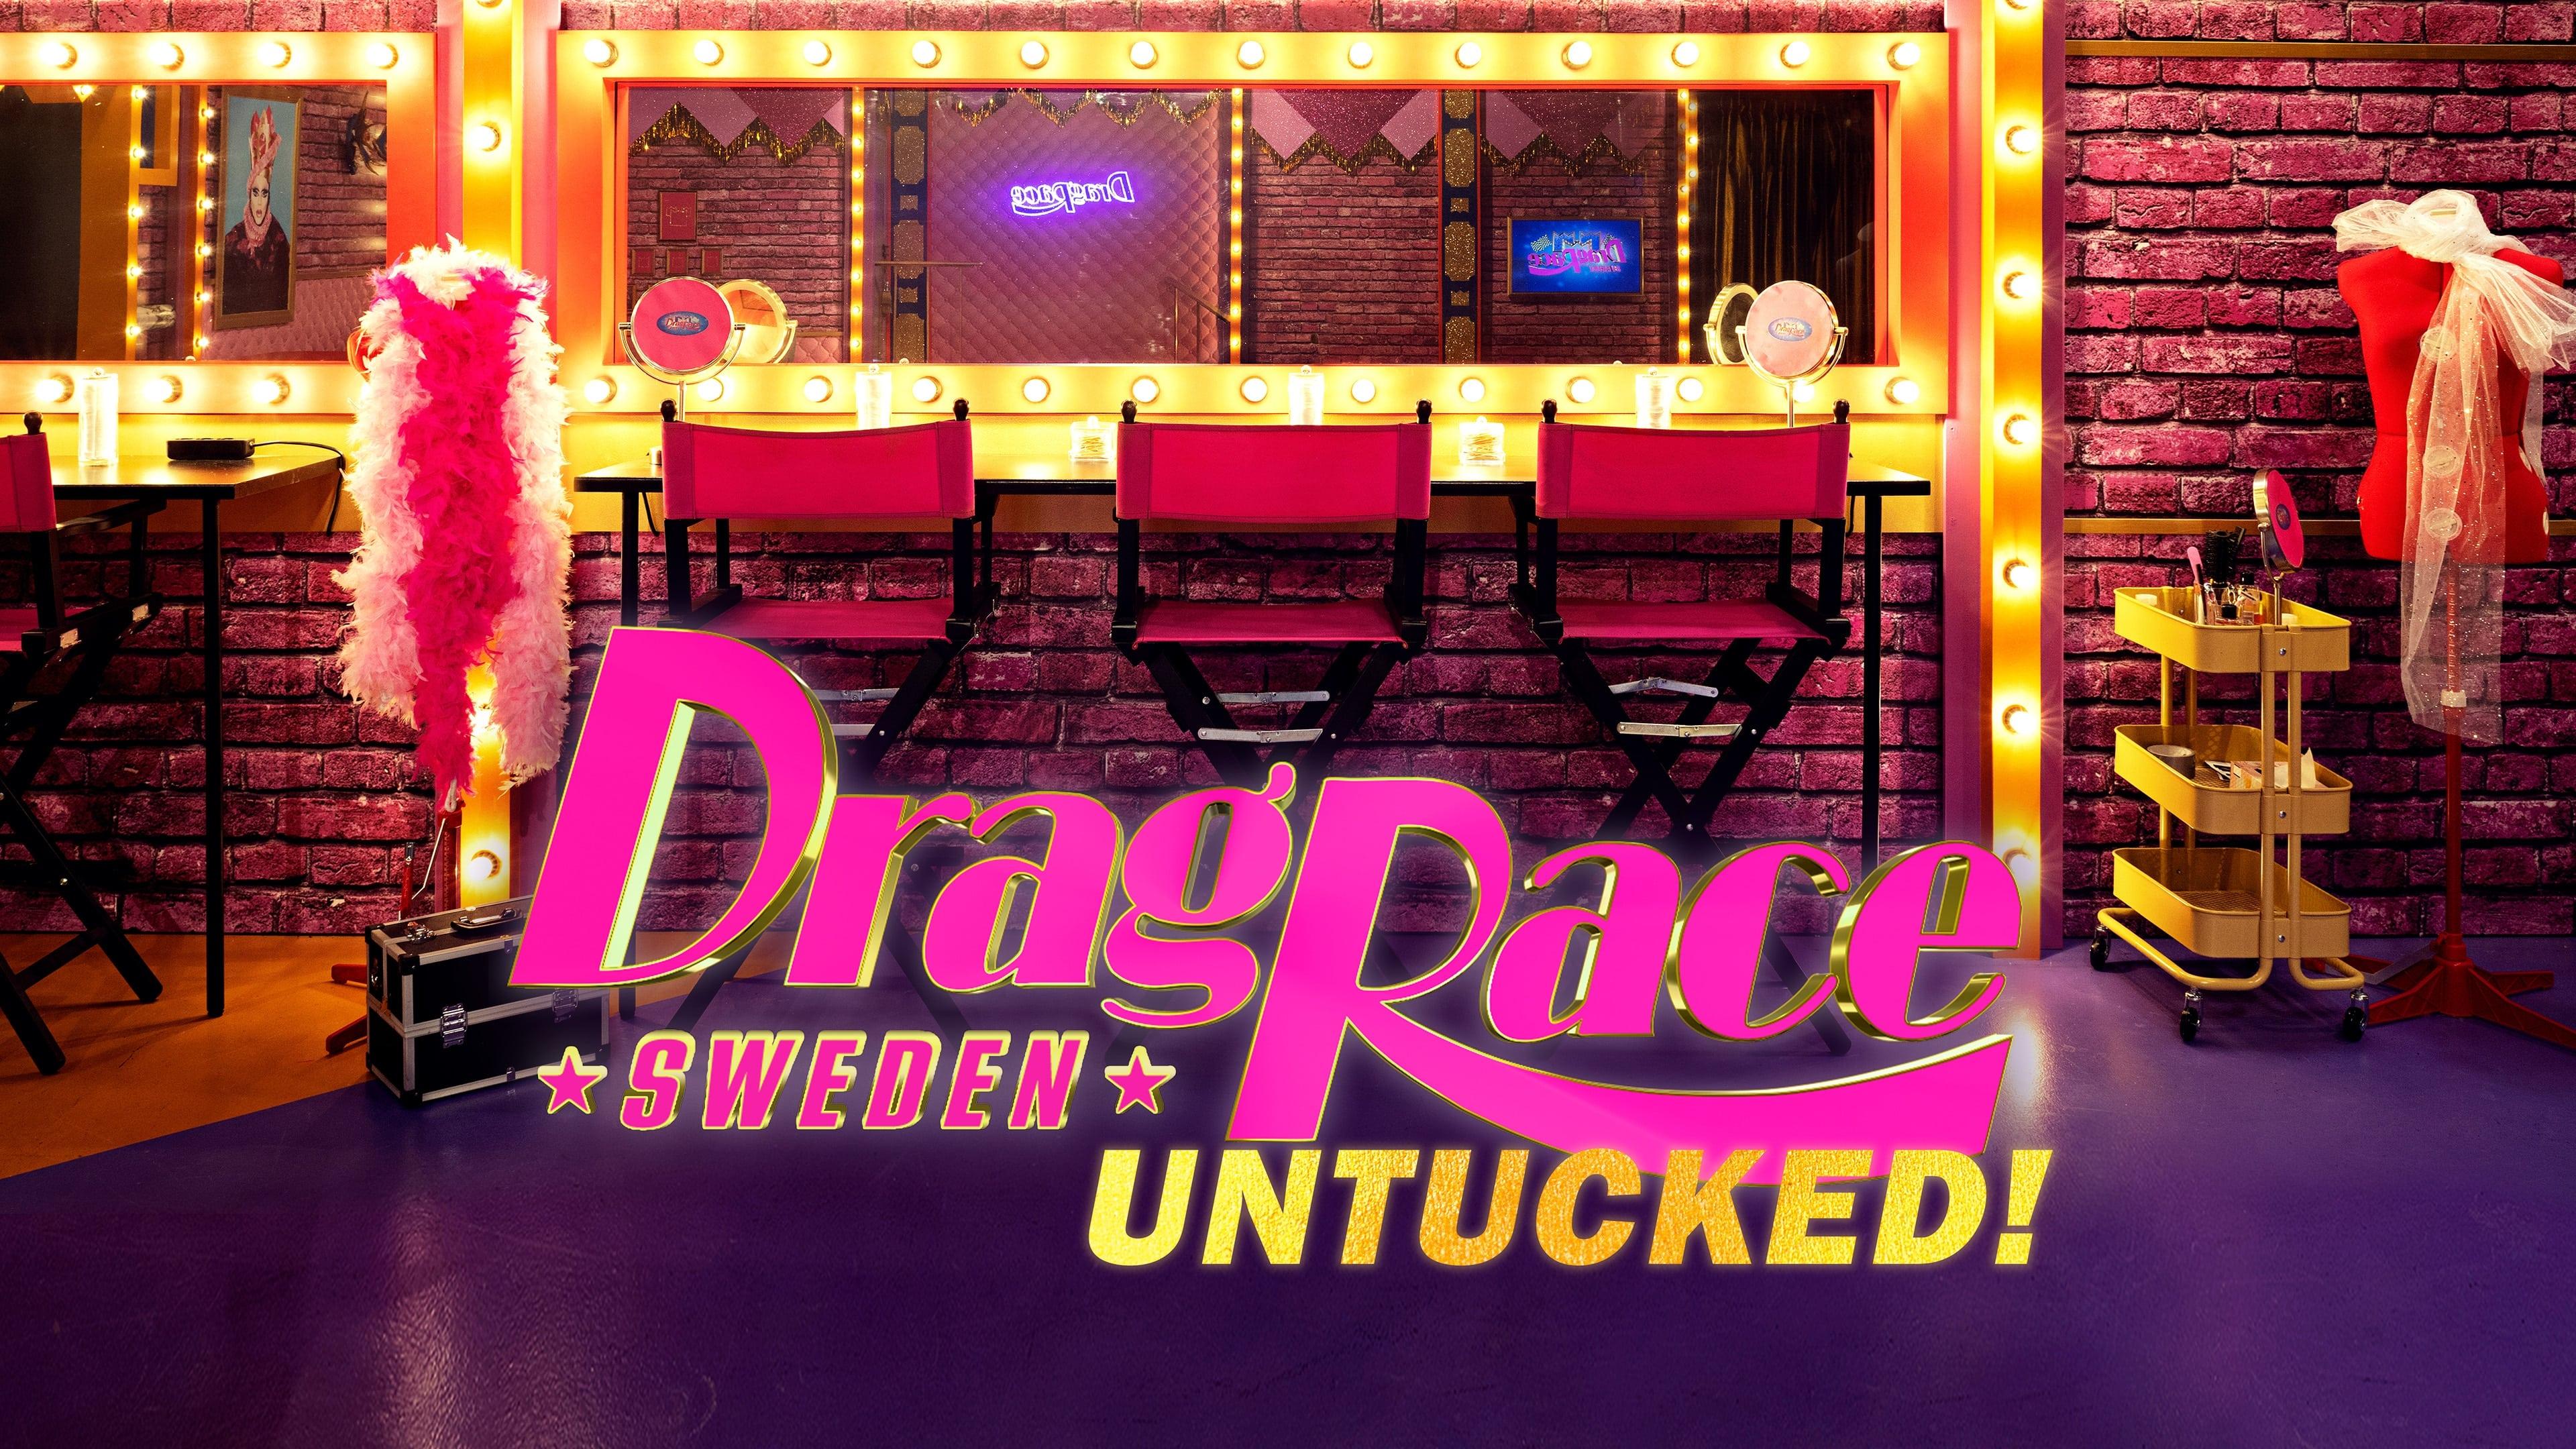 Drag Race Sverige: Untucked! backdrop